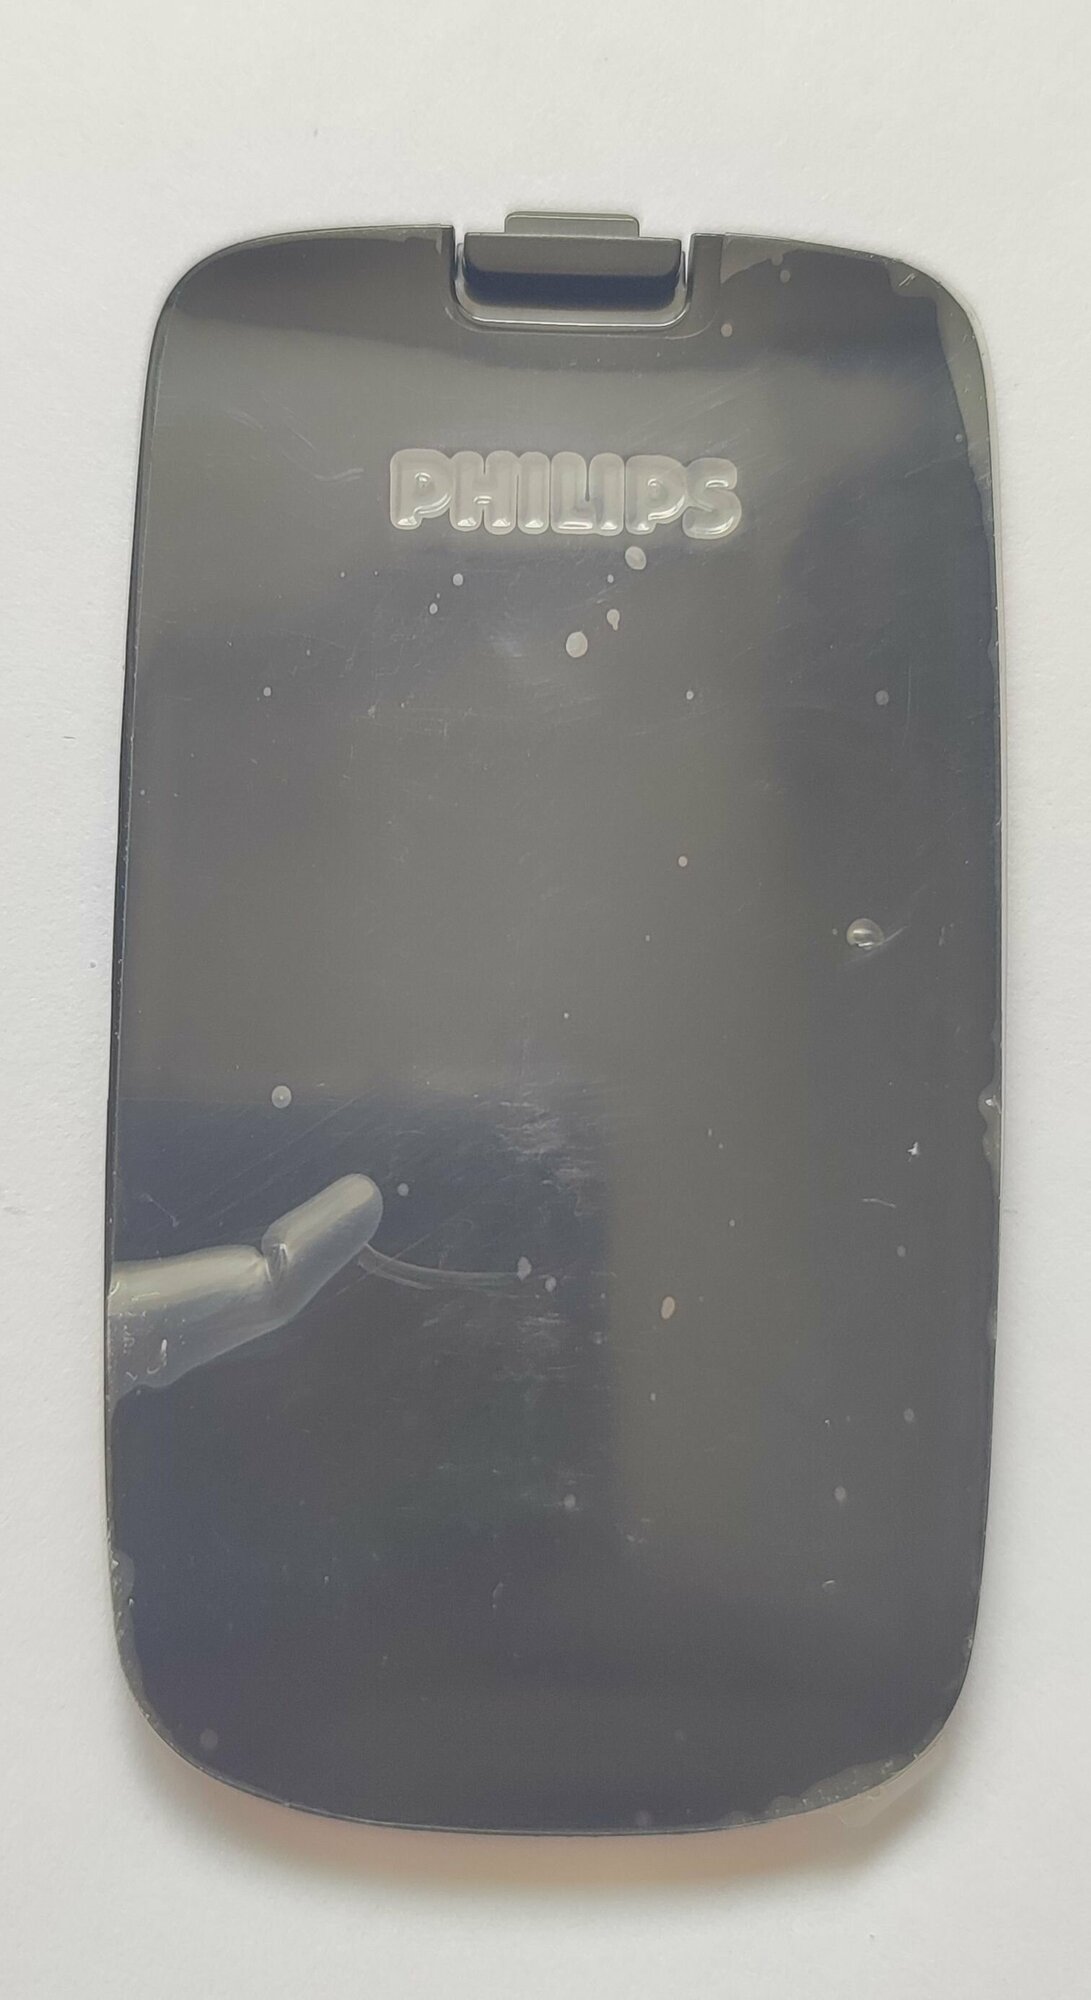 Задняя крышка корпуса панель аккумулятора Philips Xenium 9@9g ориг. бу